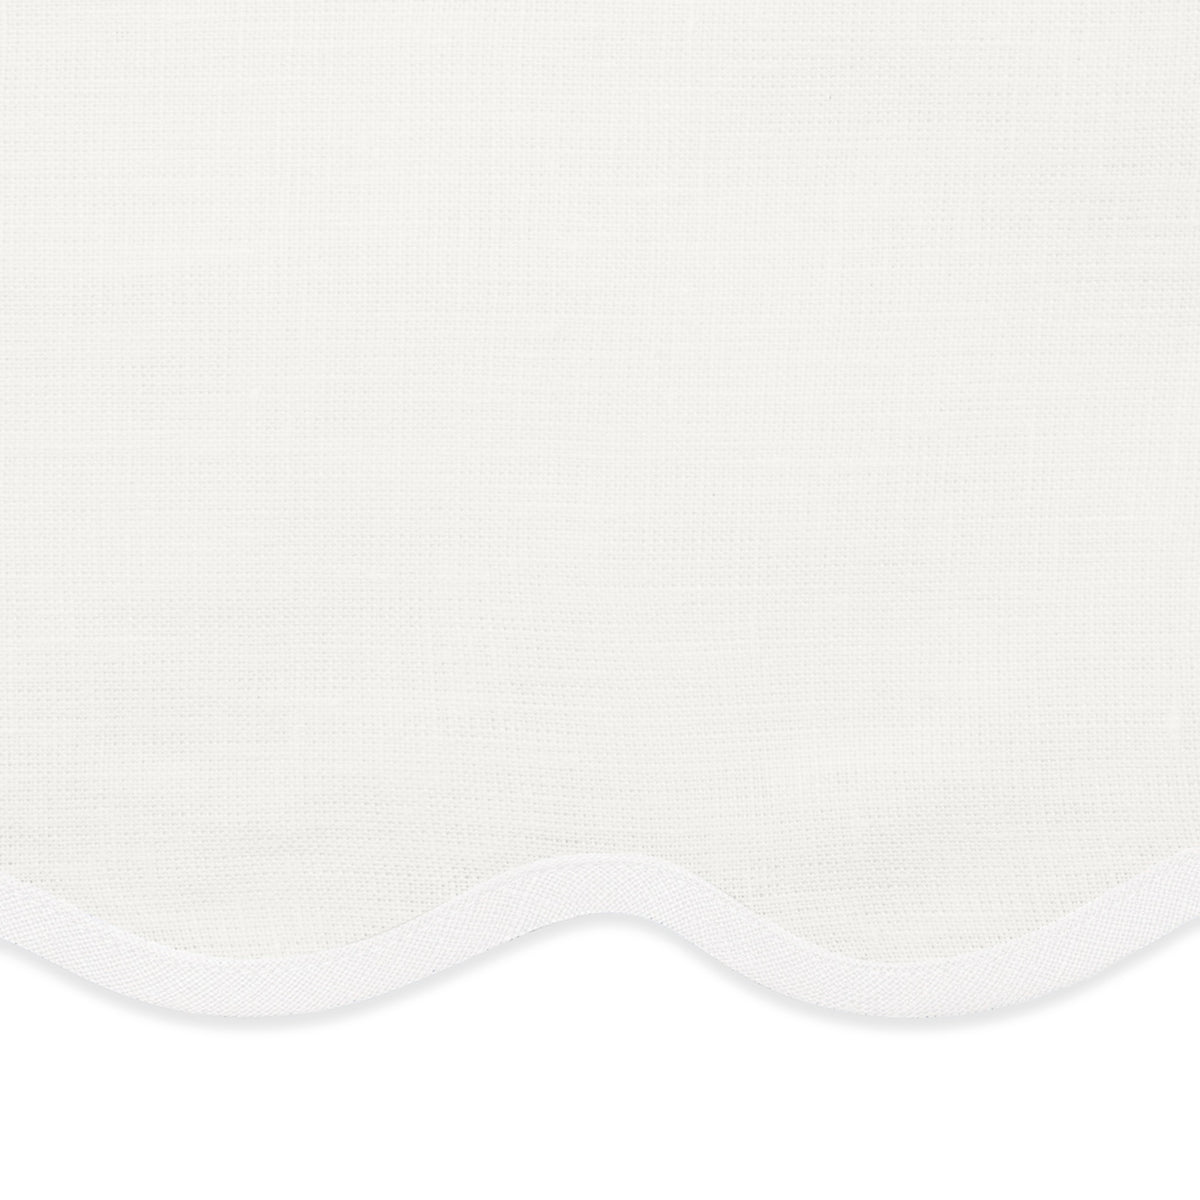 Swatch Sample of Matouk Scallop Edge Table Linens in White/White Color